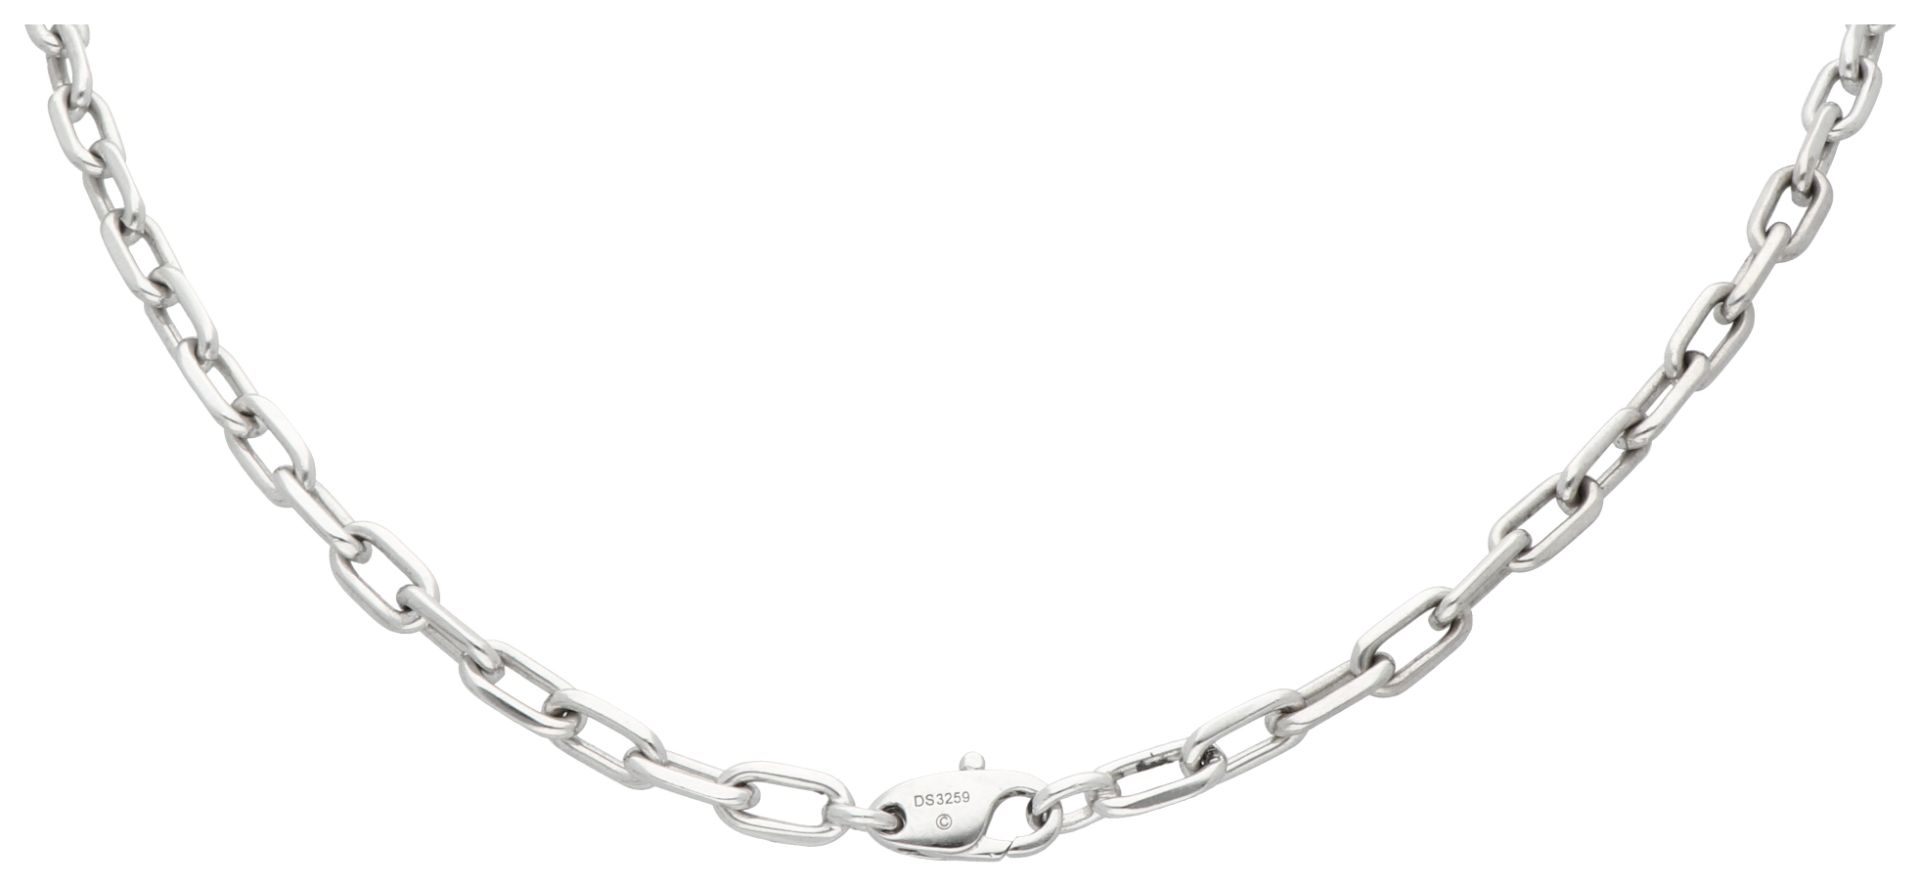 No Reserve - Cartier 18K white gold Santos link necklace. - Image 2 of 4